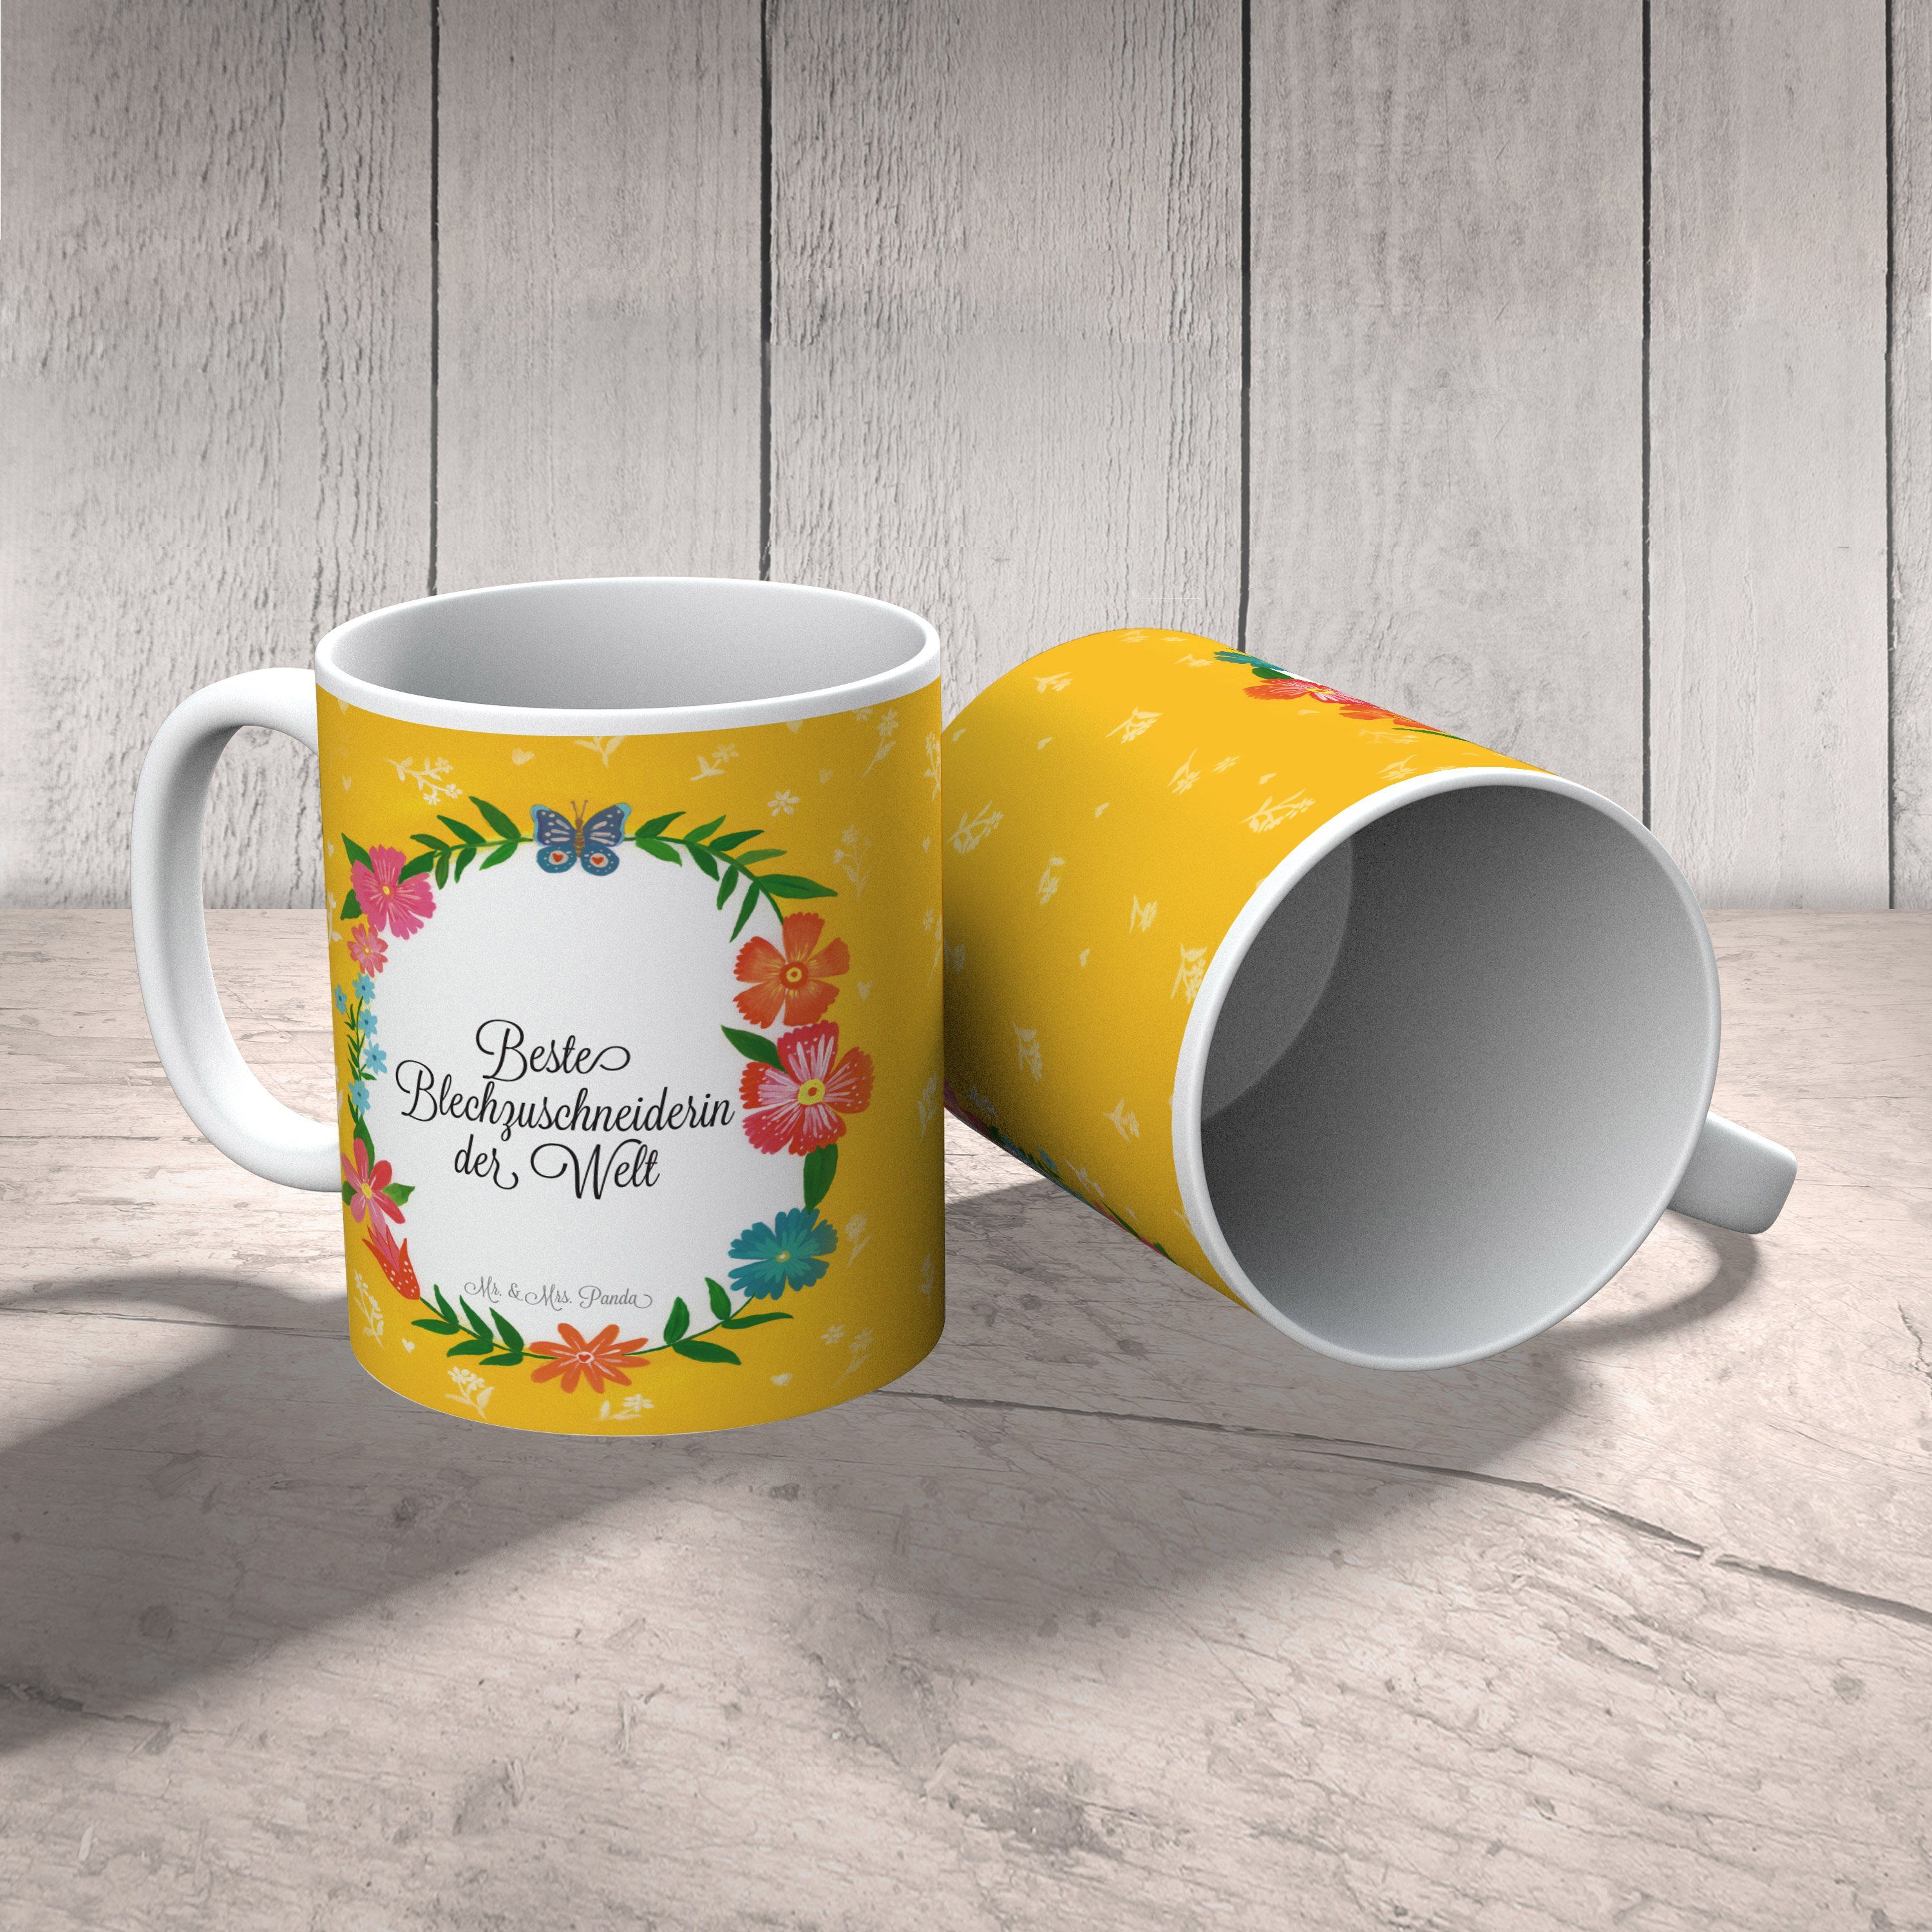 Mr. & Mrs. Panda Tasse Kaffeetasse, Geschenk Geschenk, Keramik Tasse, - Abschied, Blechzuschneiderin